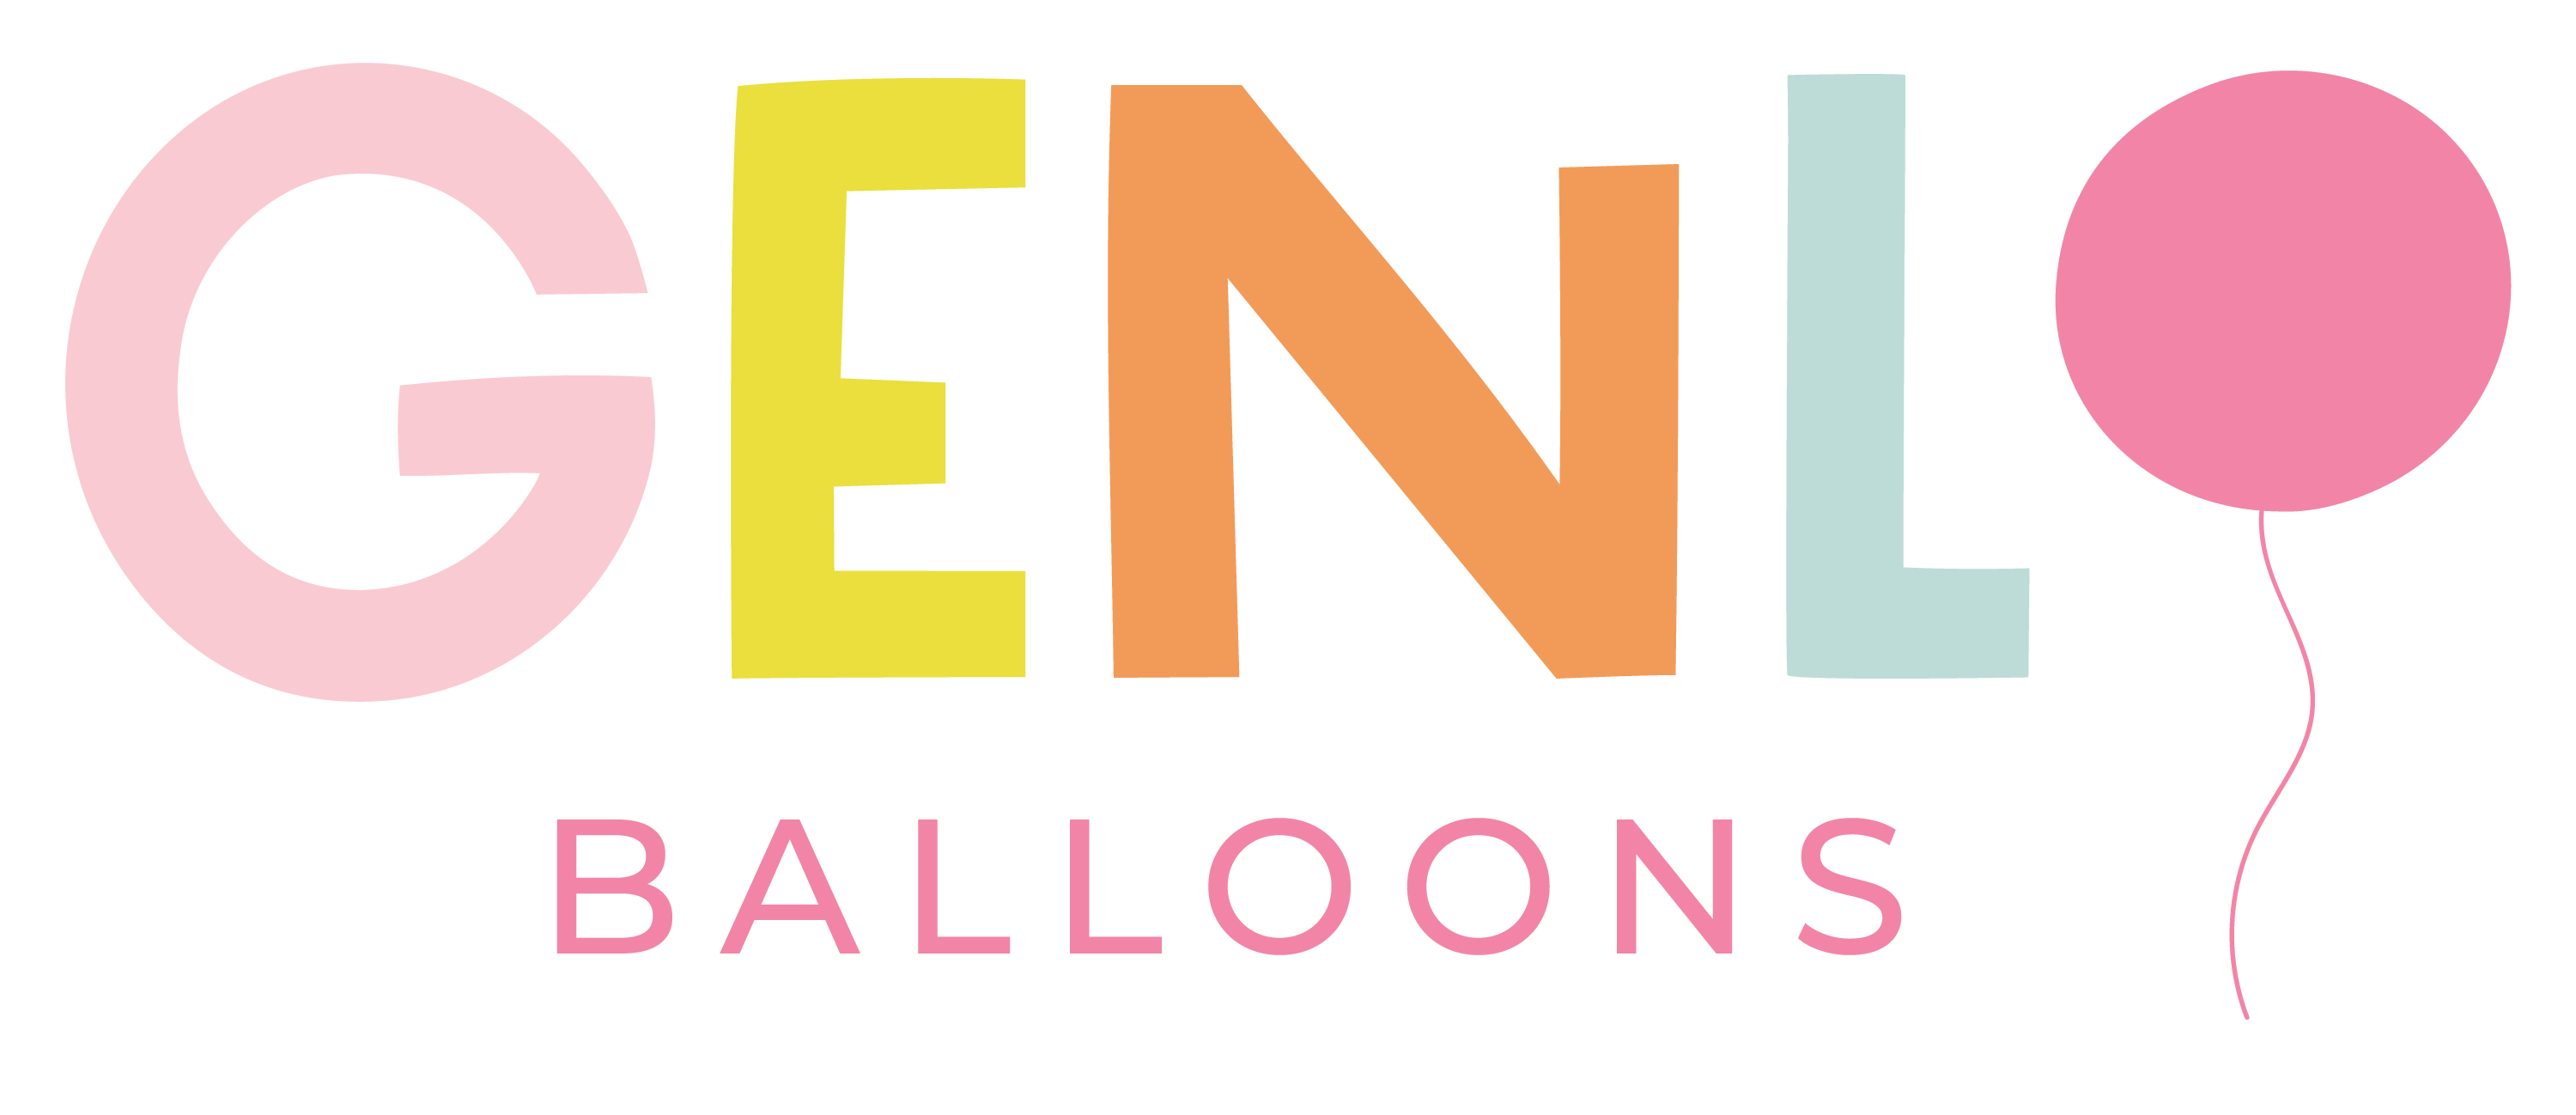 Celebrating Women's History Month, Gleno Balloons